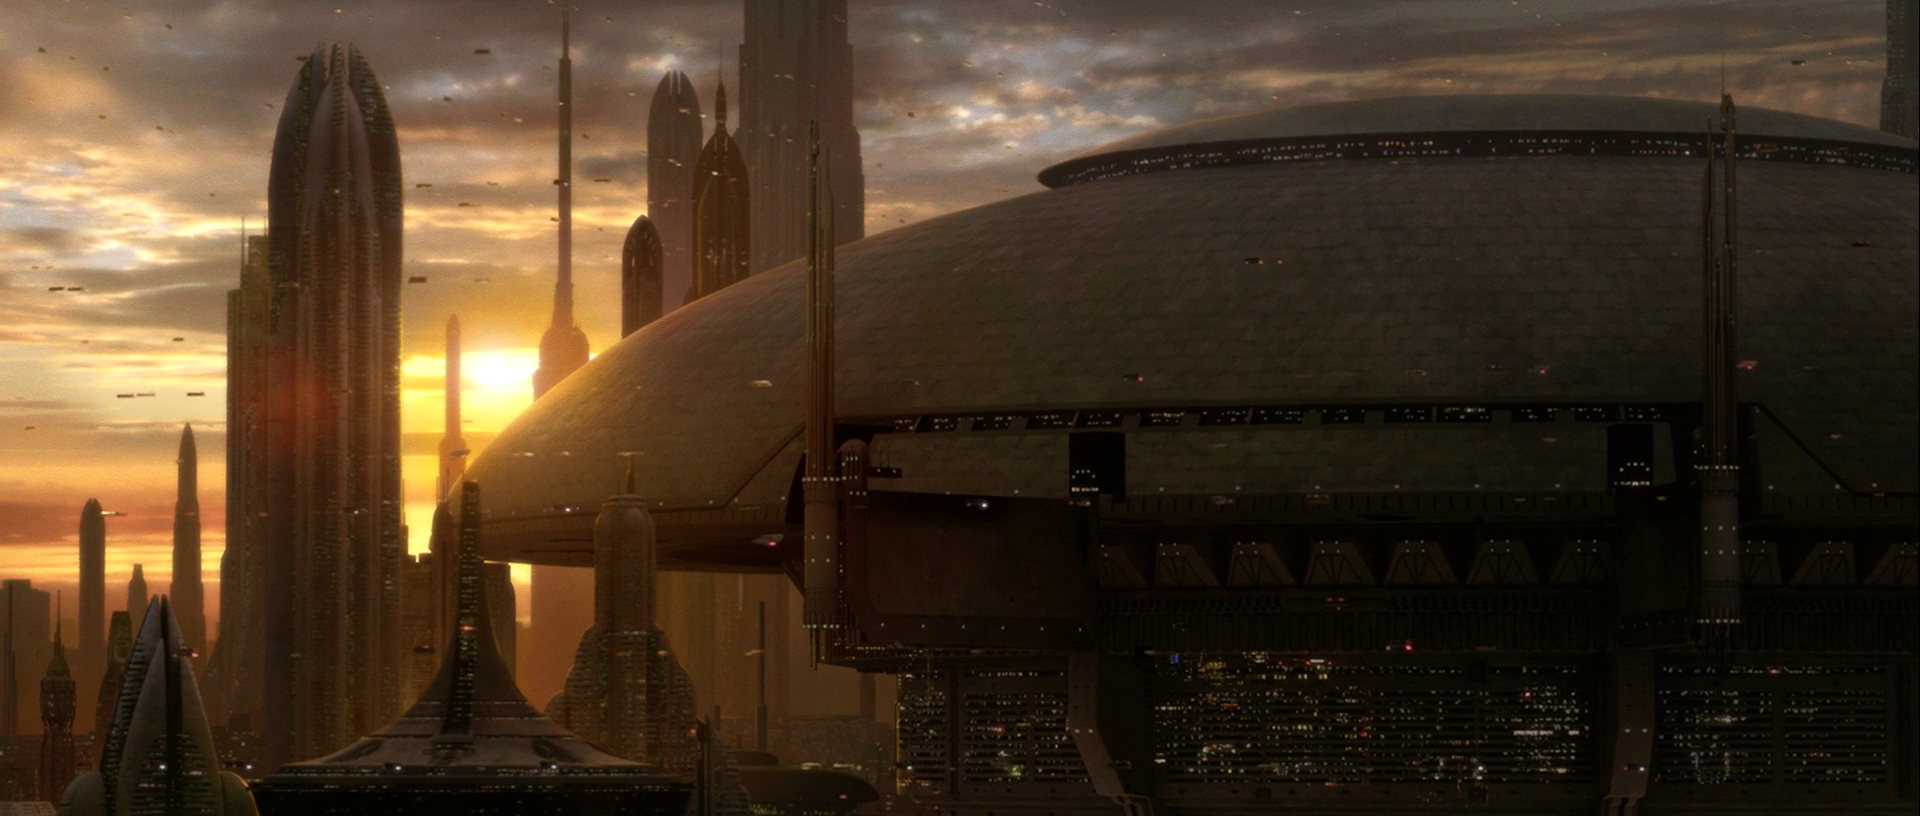 Star Wars Coruscant Futuristic City Science Fiction 1920x816